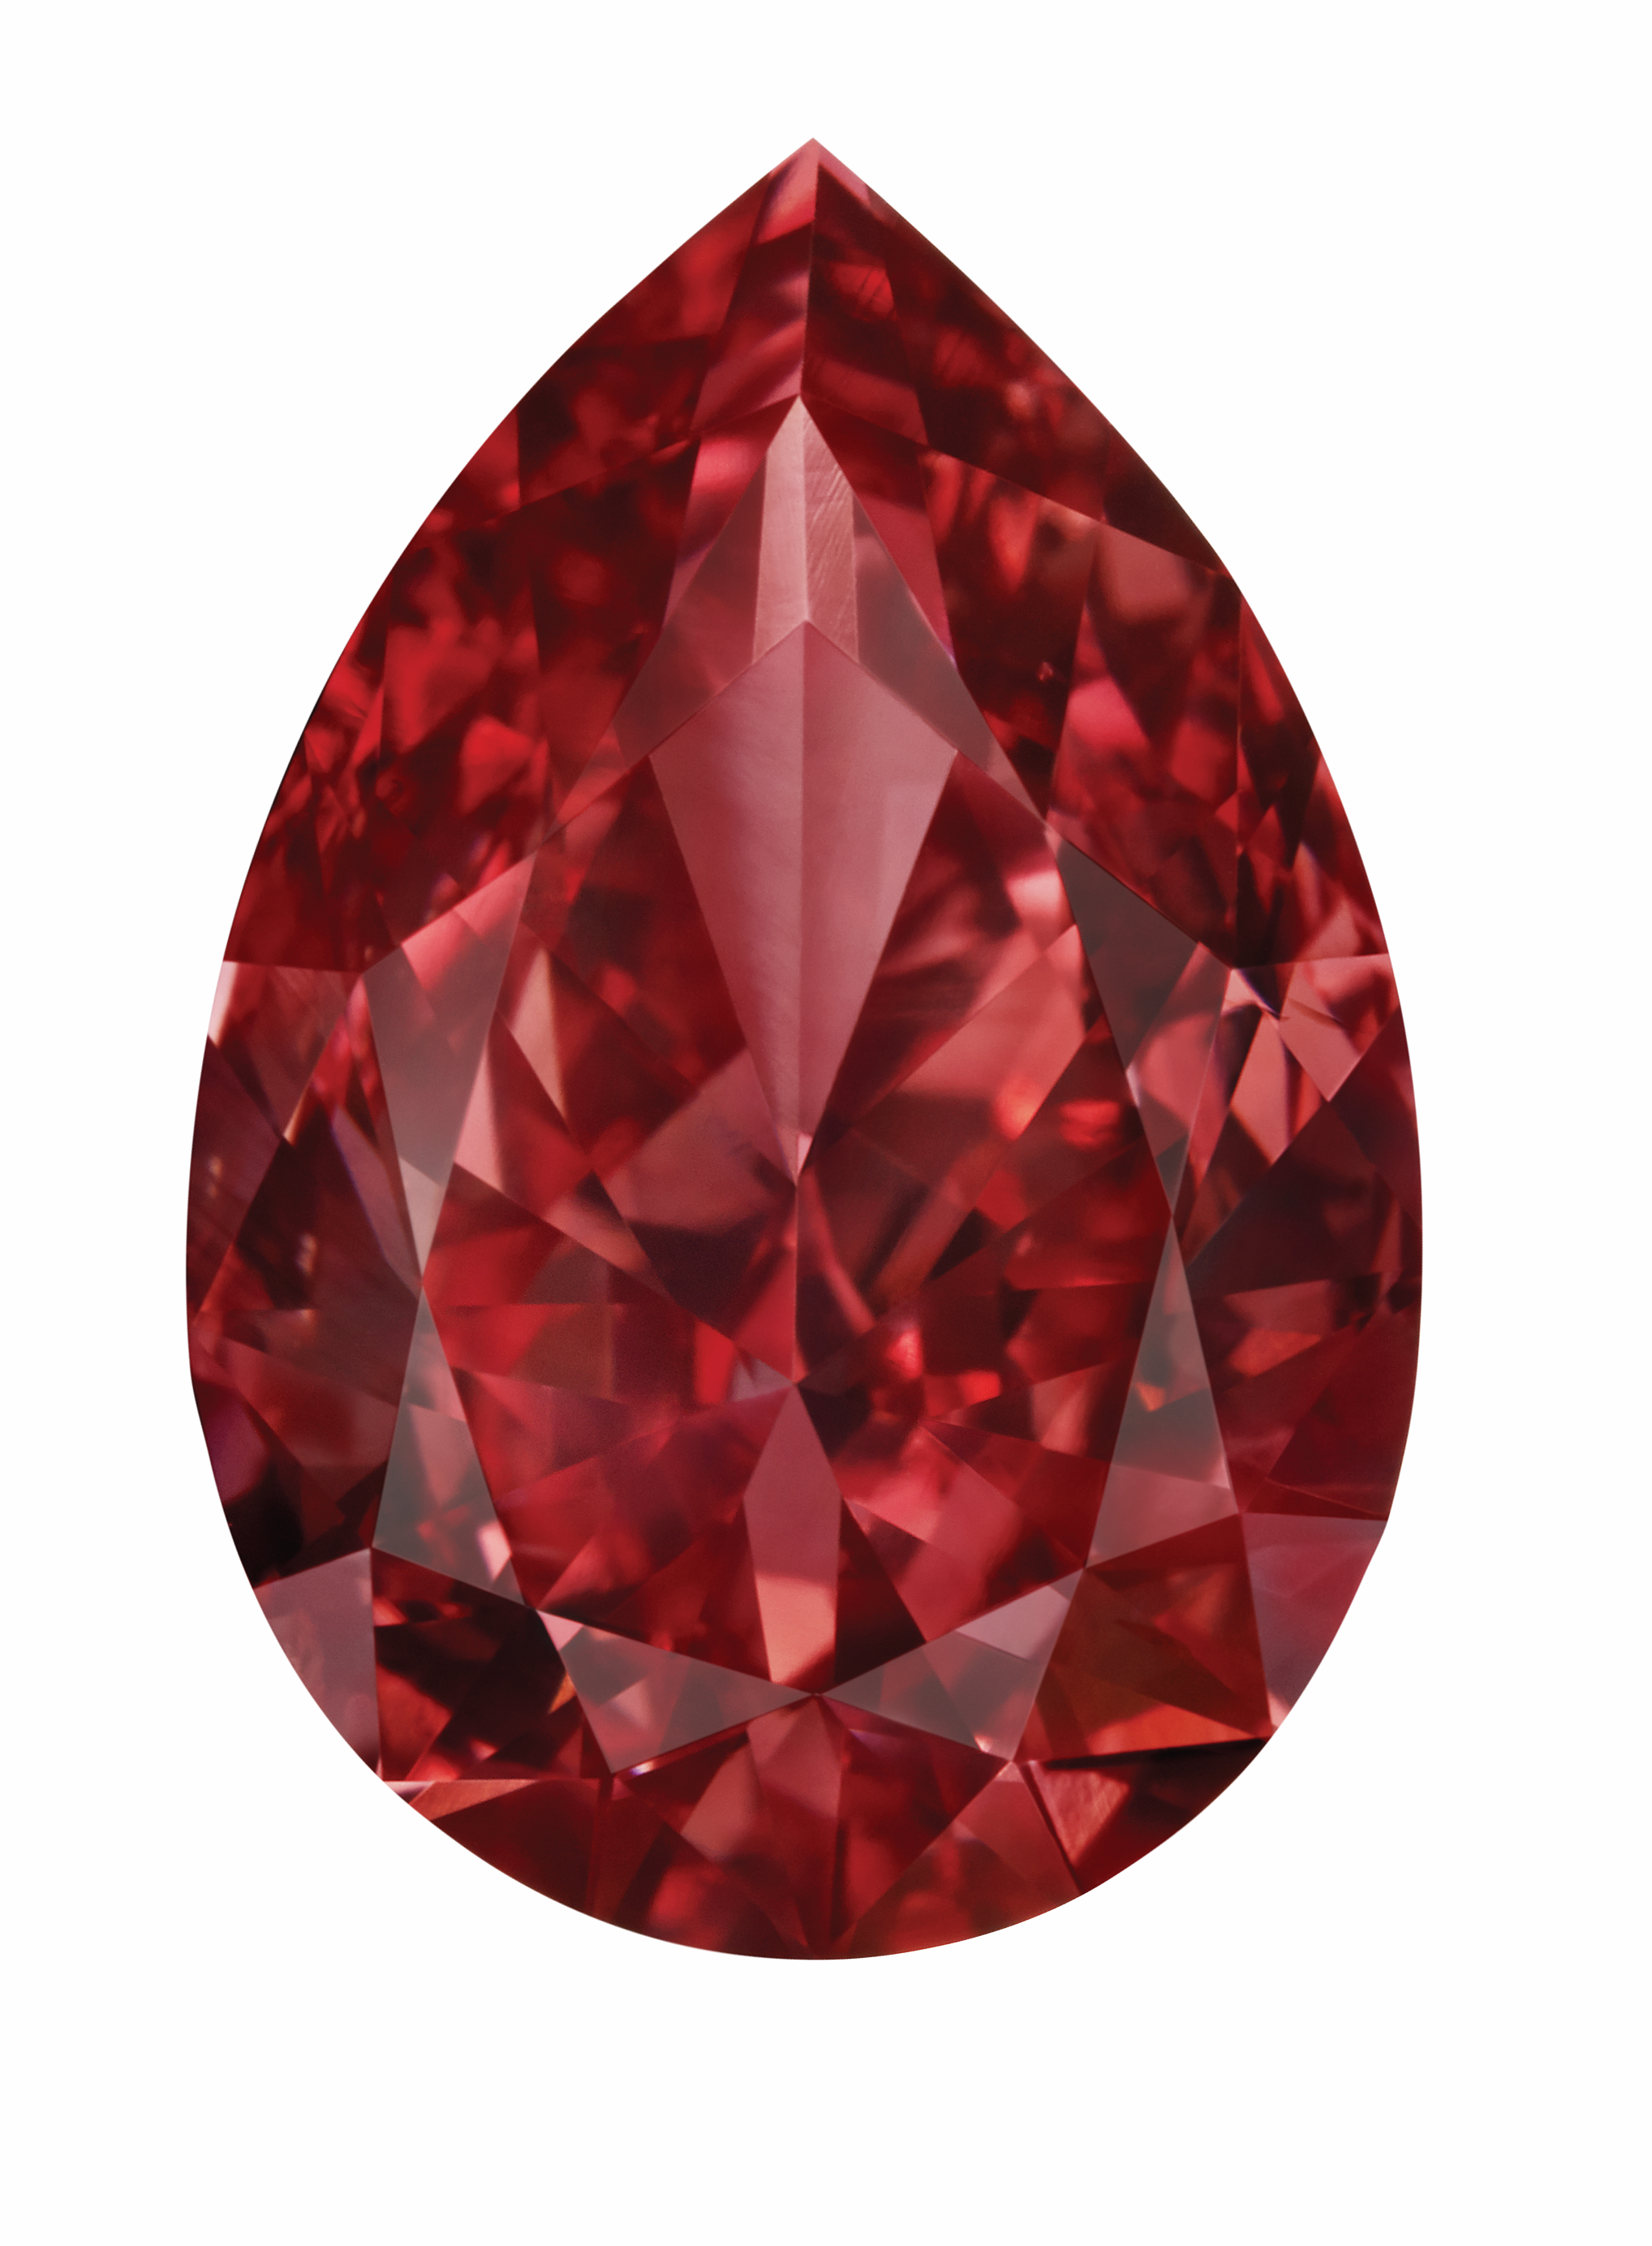 The Argyle Prima, 1.20 carat fancy red, pear shape diamond. Rio Tinto